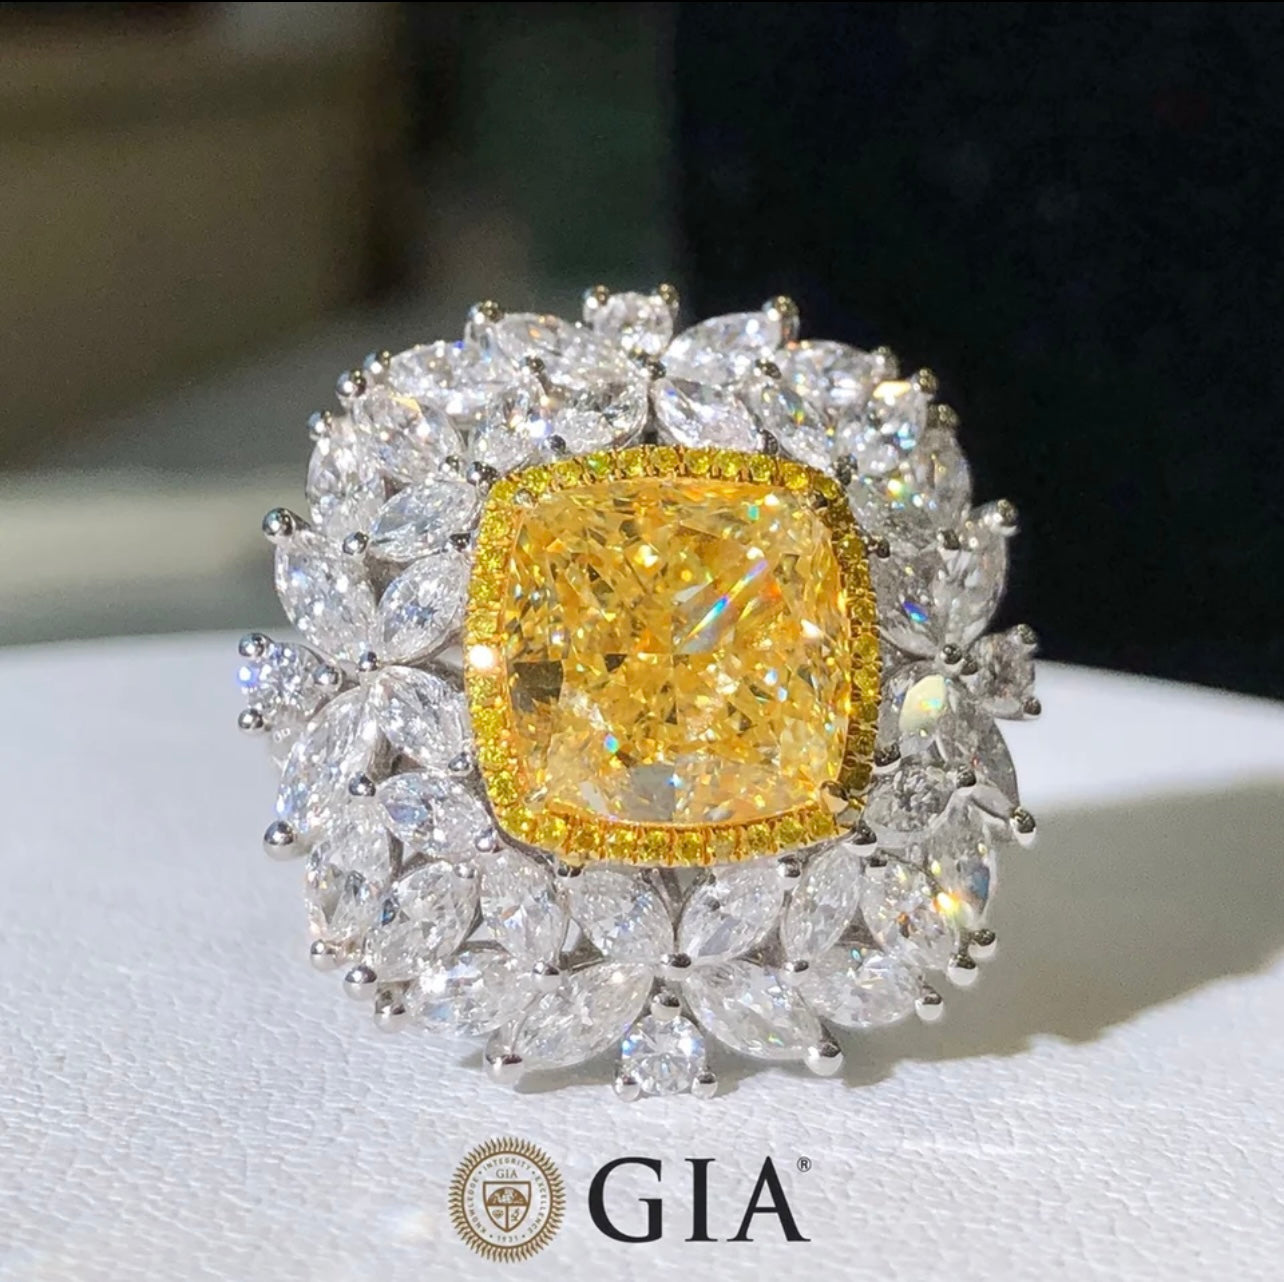 GIA Certified Argyle Diamond 6.00 Carats Fancy Vivid Yellow Brilliant Cushion Cut Diamond Ring Very Beautiful.